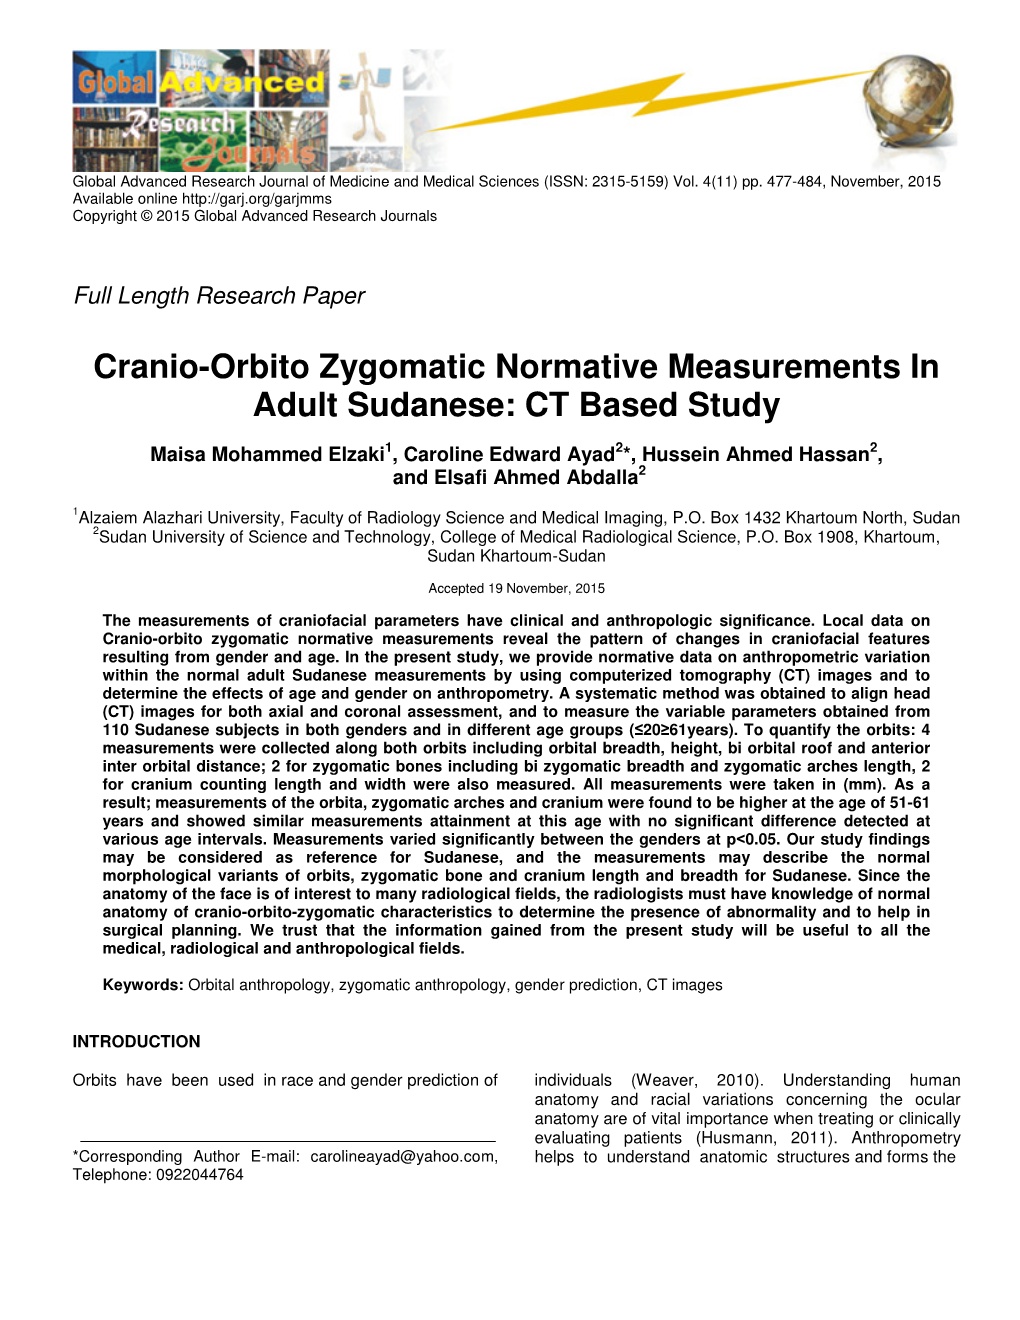 Cranio-Orbito Zygomatic Normative Measurements in Adult Sudanese: CT Based Study